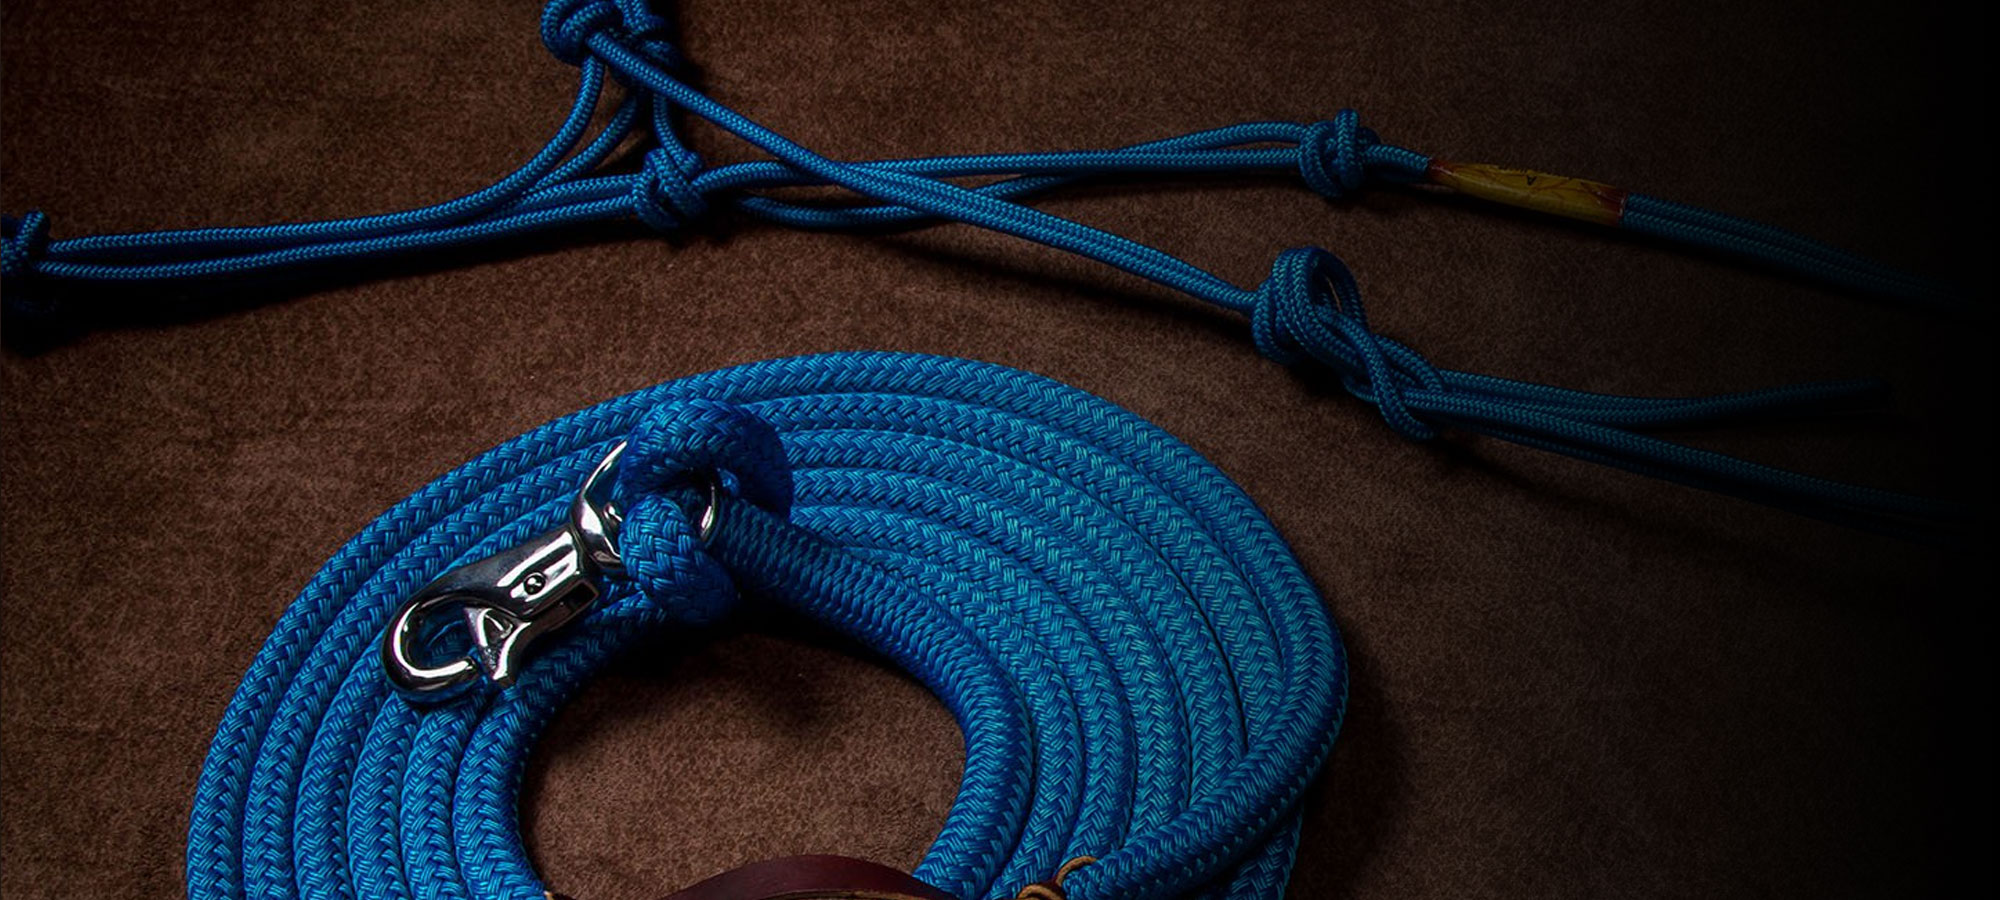 halter lead rope